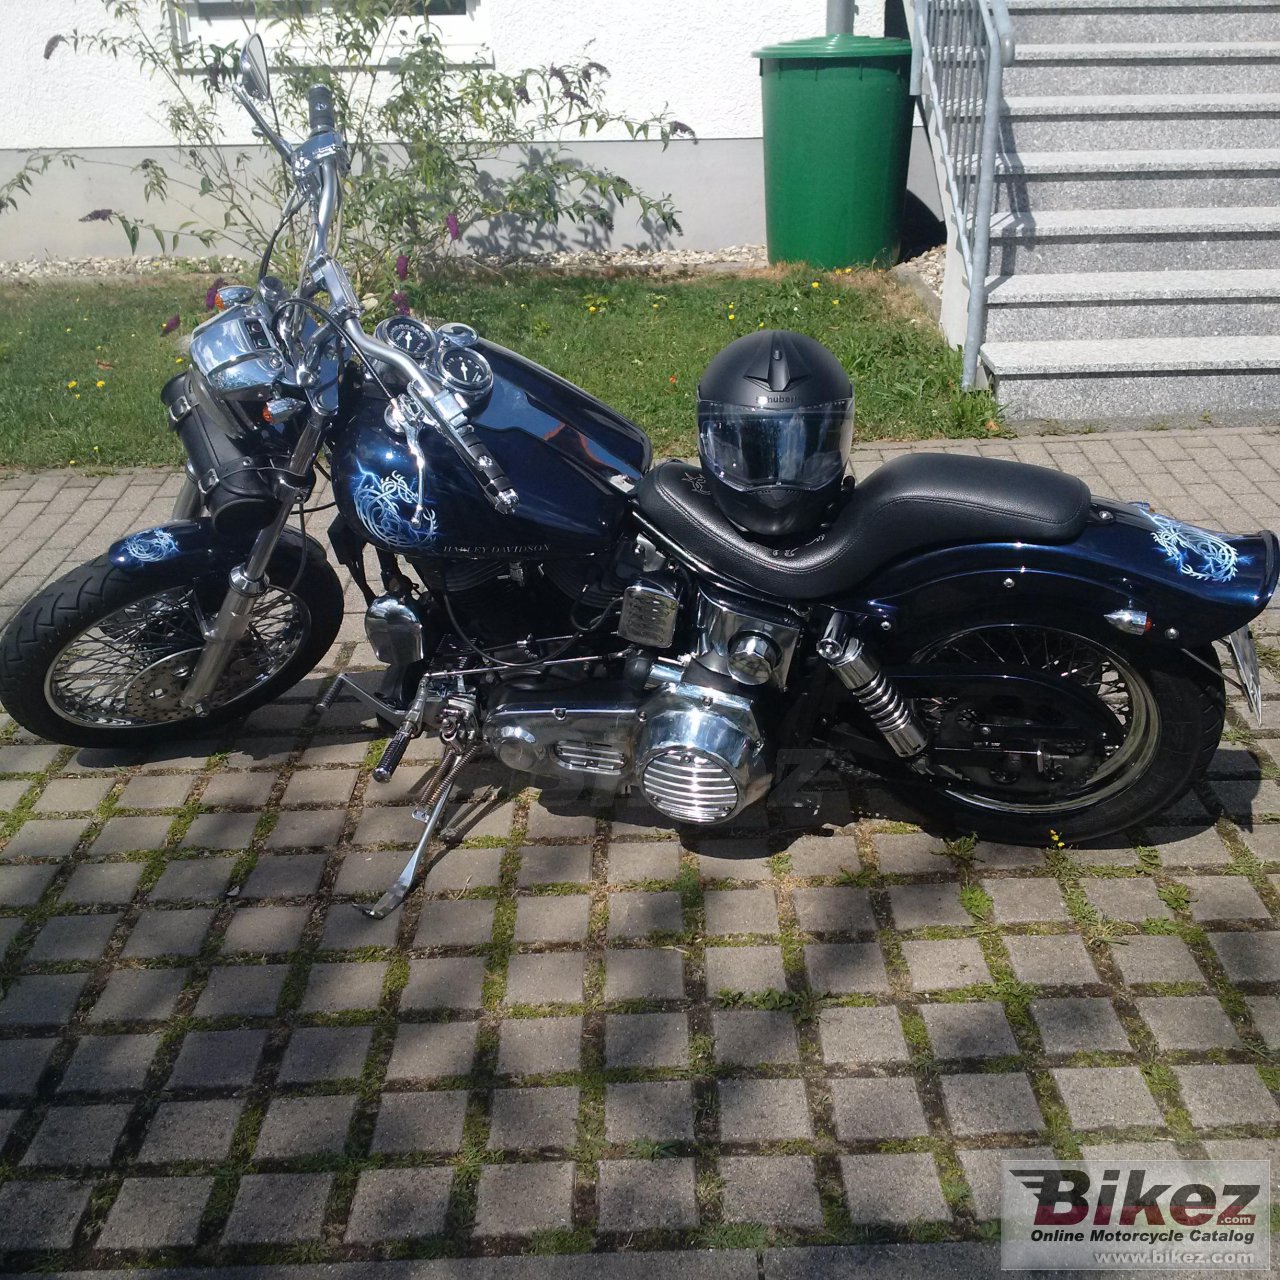 Harley-Davidson FXS 1340 Low Rider